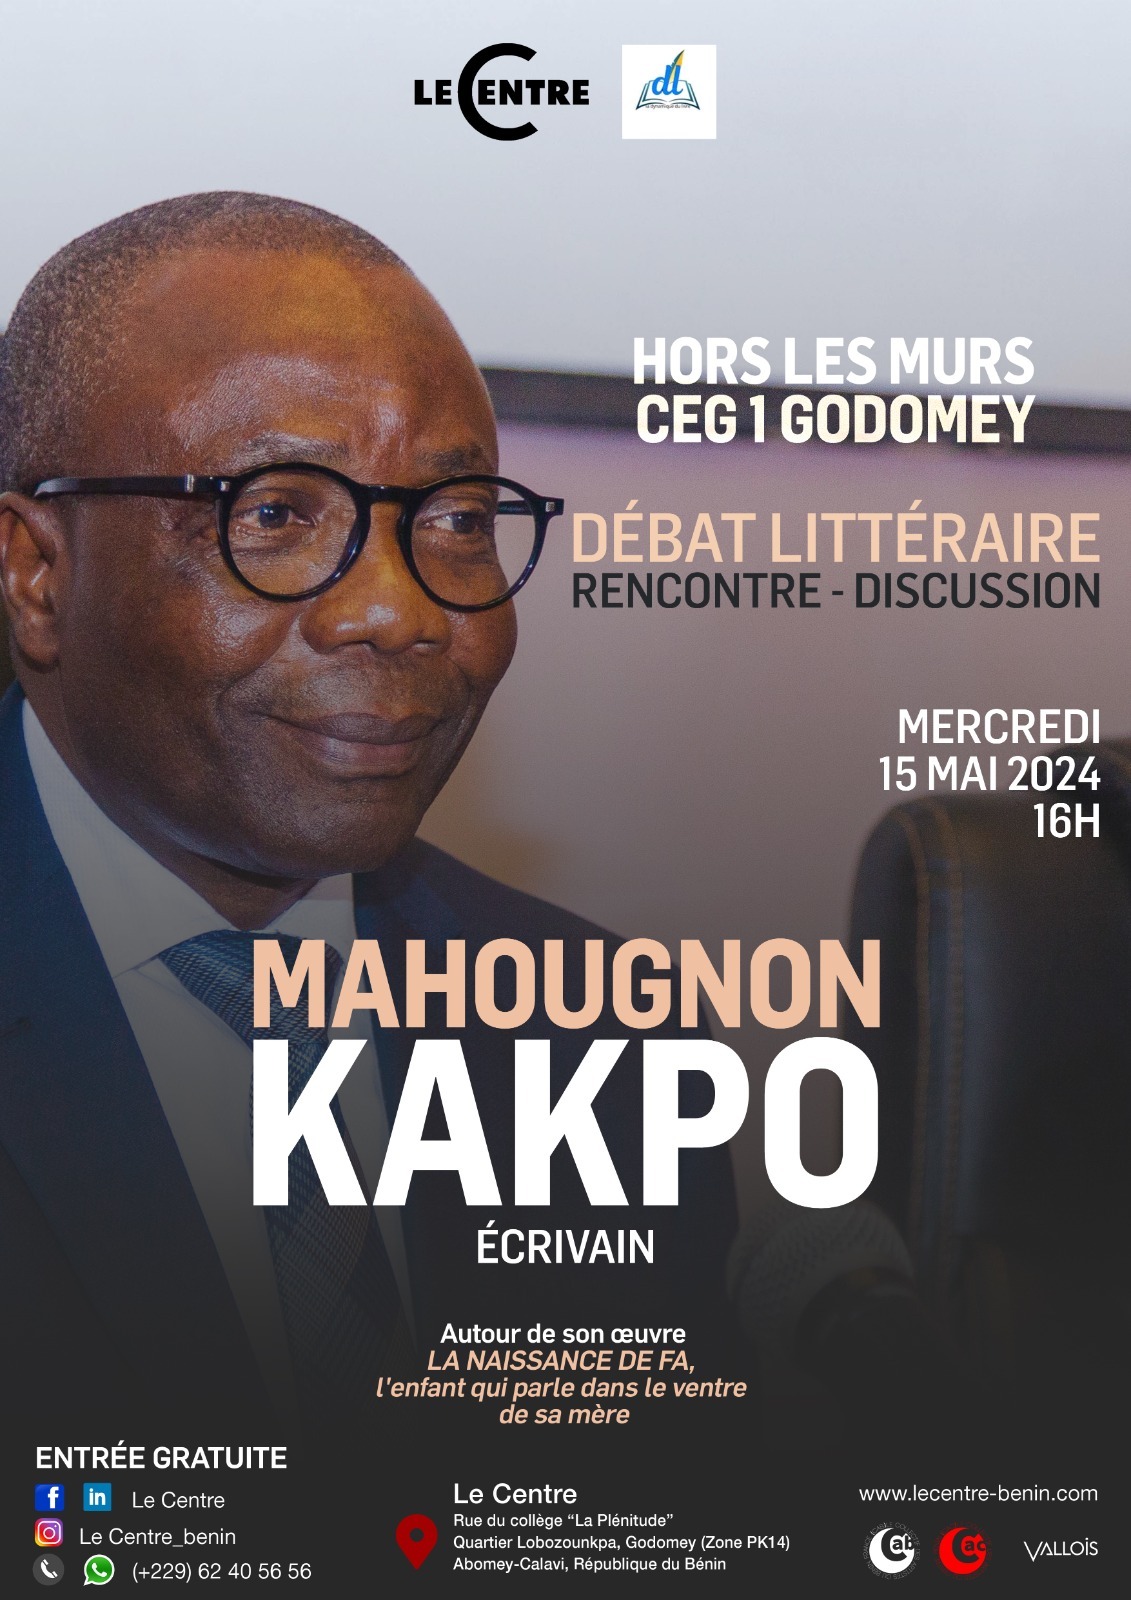 Mahougnon Kakpo